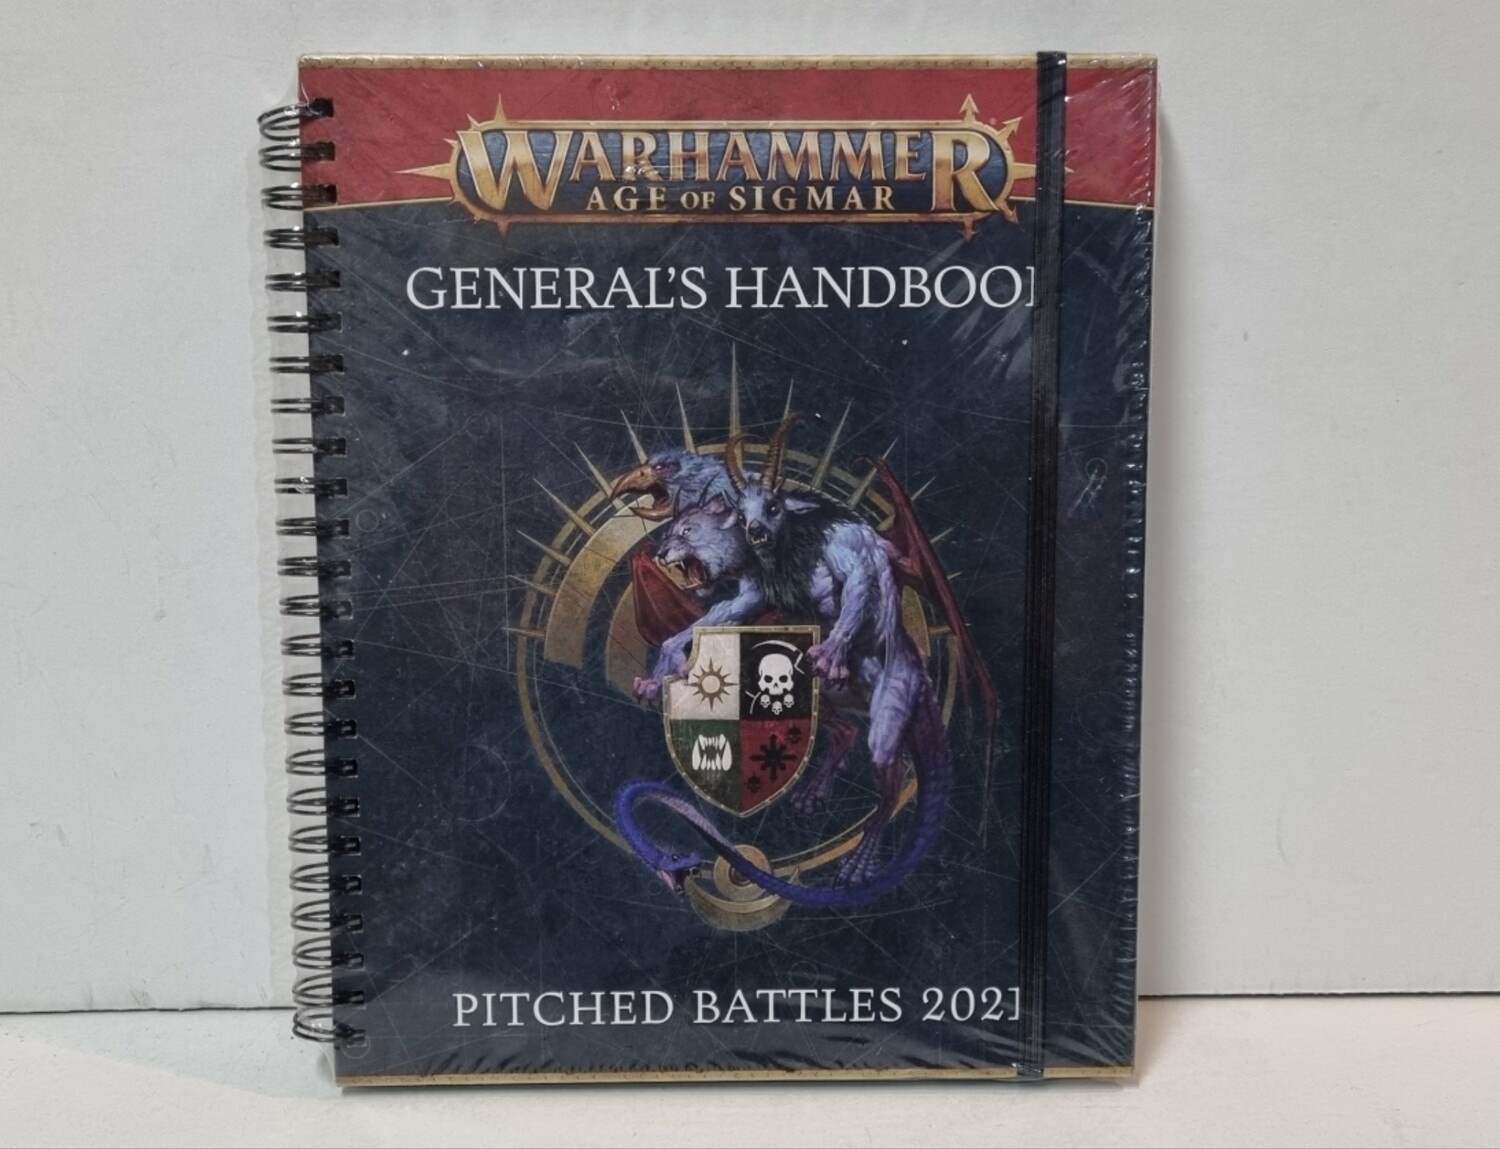 Warhammer Age of Sigmar, General's Handbook Pitched battles 2021